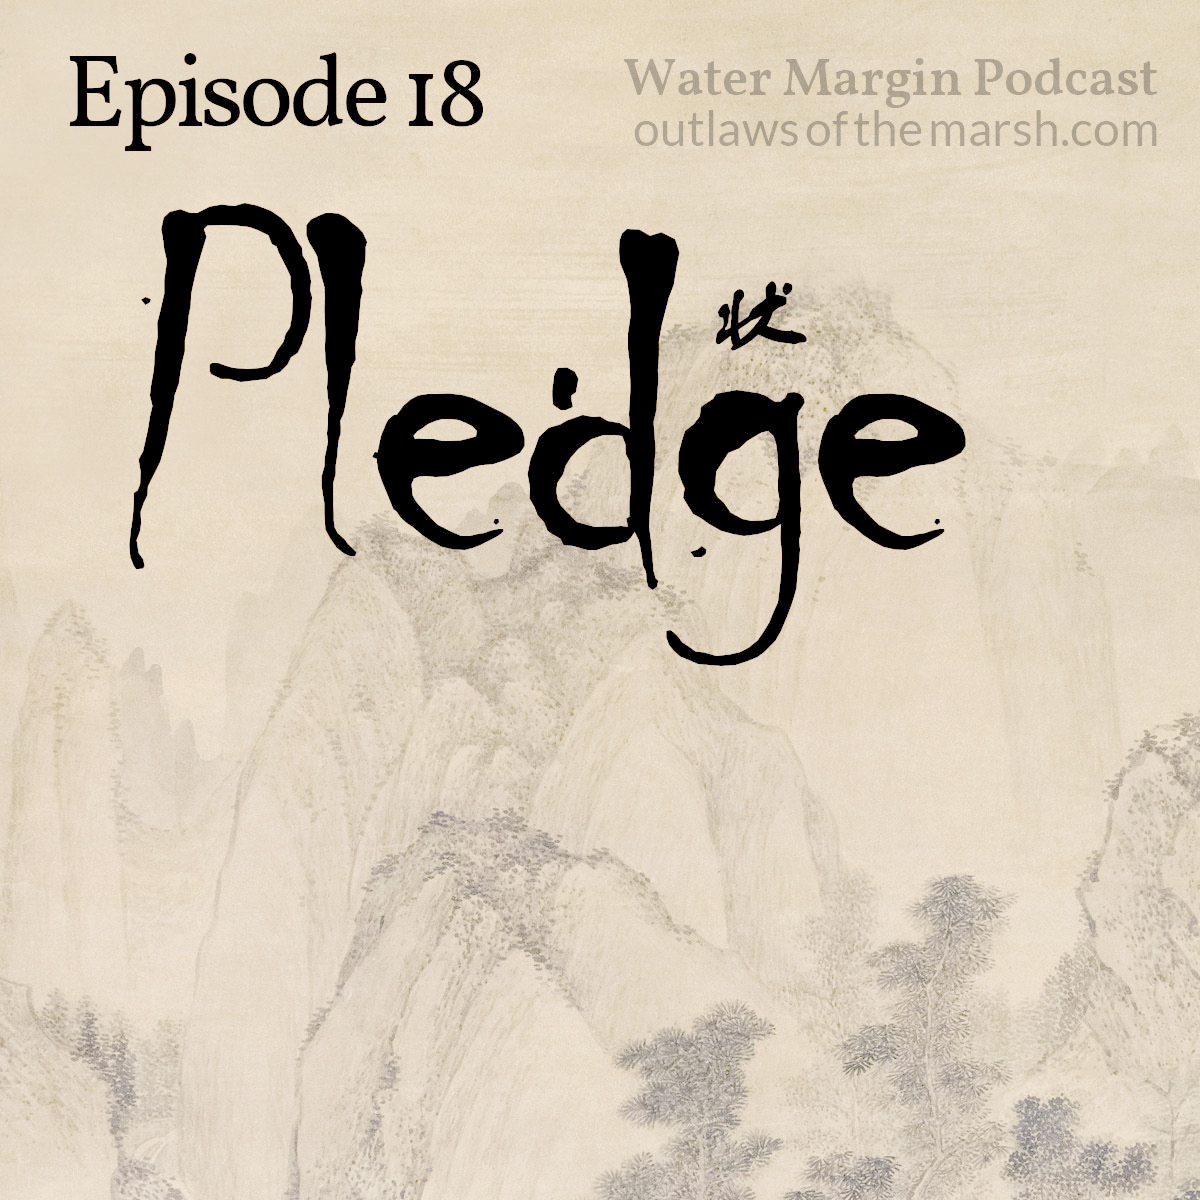 Water Margin Podcast: Episode 018